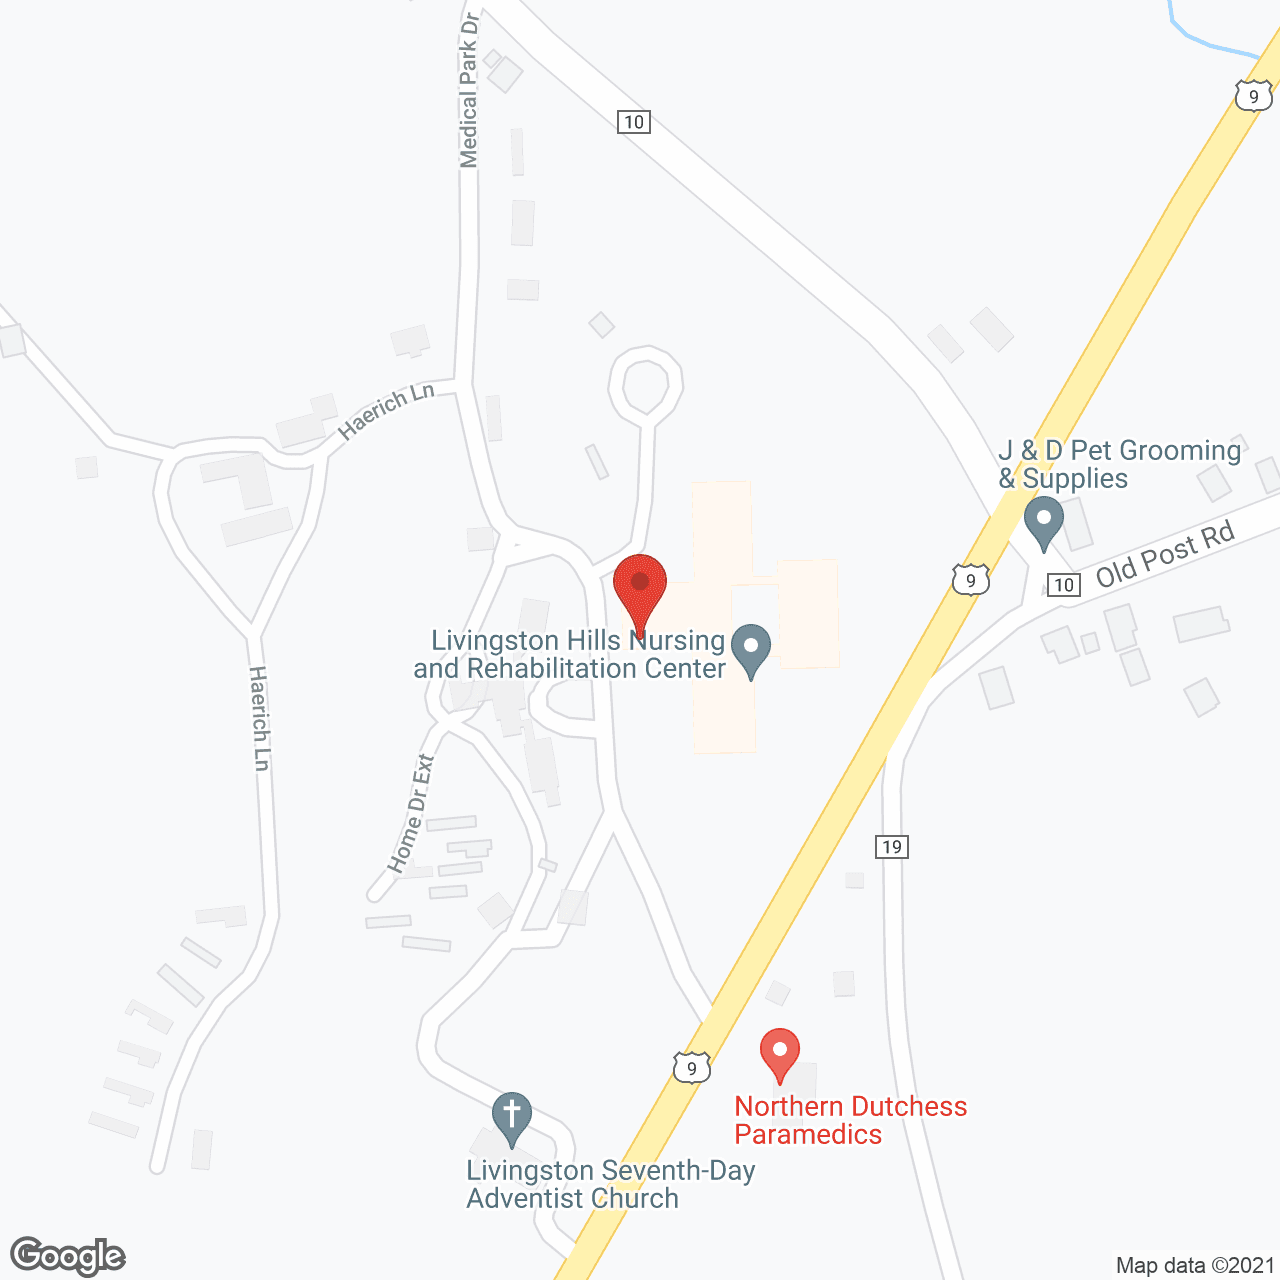 Livingston Hills Nursing and Rehabilitation C in google map